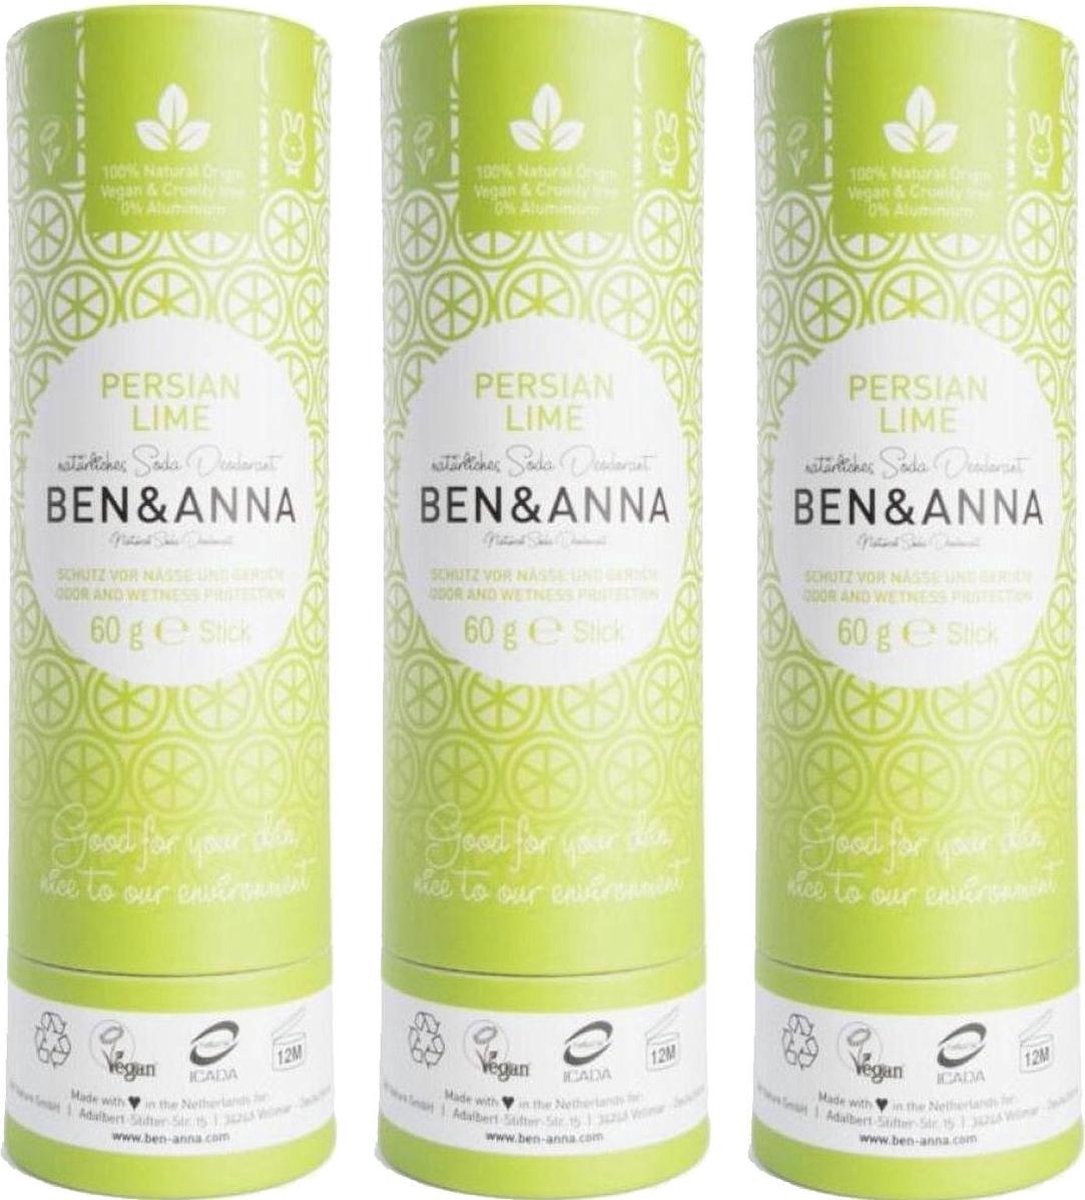 Ben & Anna Natural Deodorant Stick - Persian Lime - 3 pak